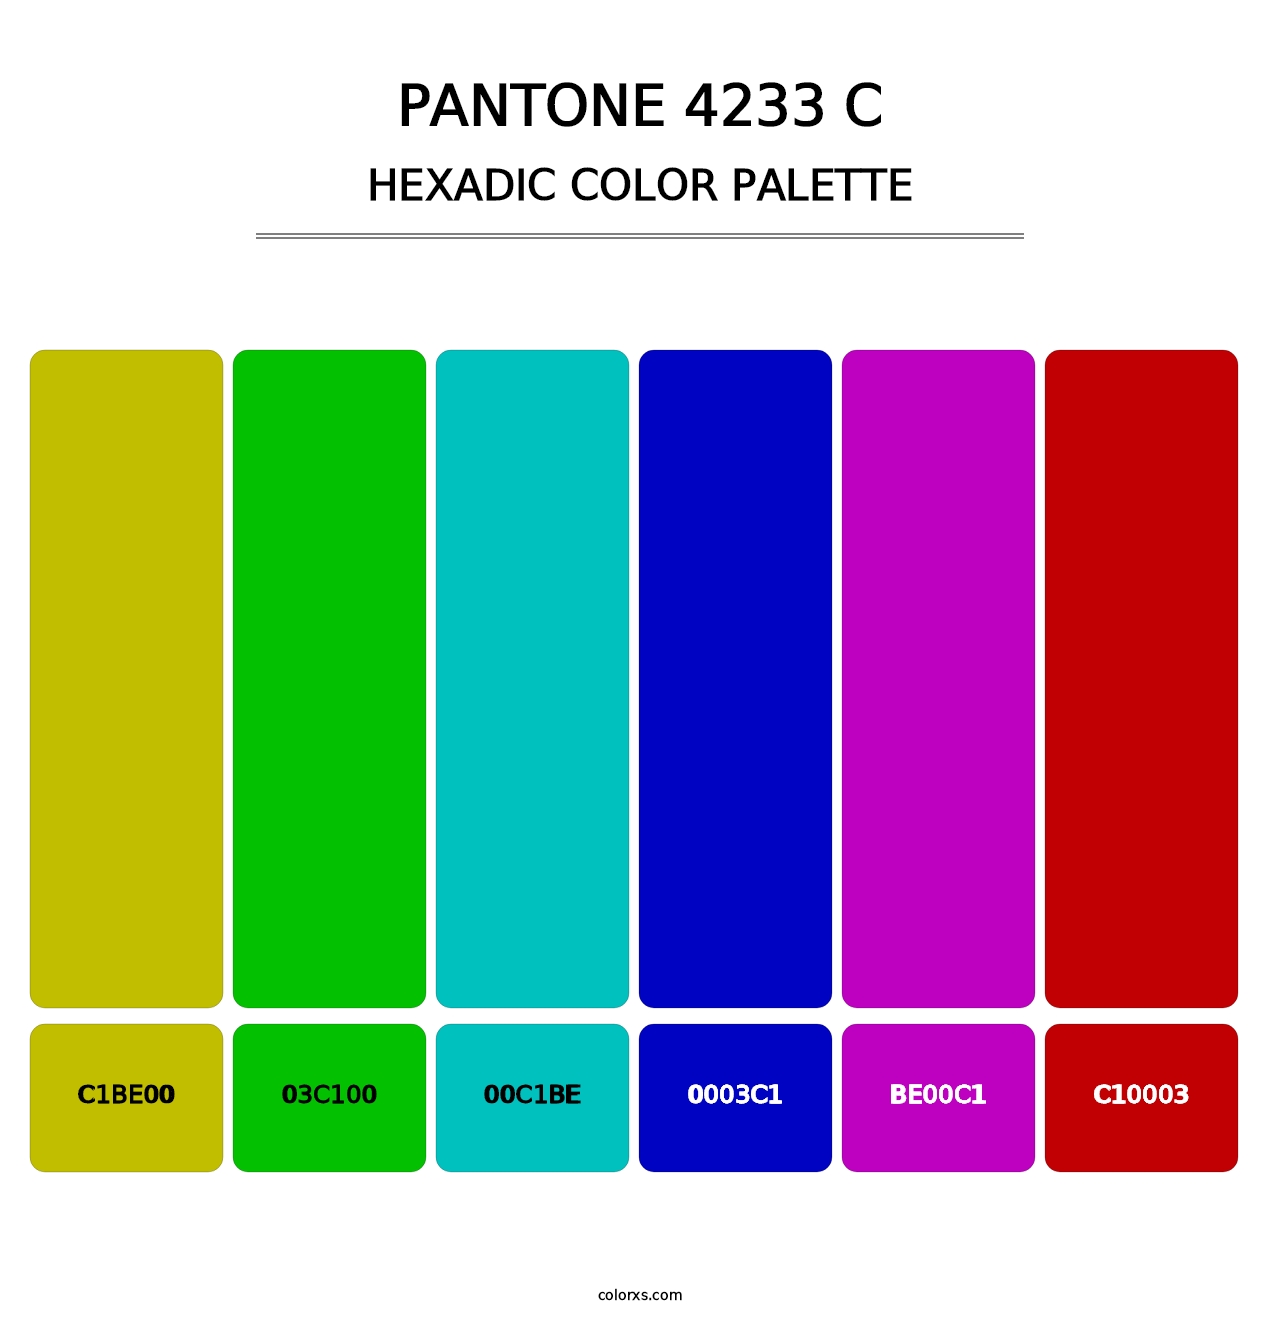 PANTONE 4233 C - Hexadic Color Palette